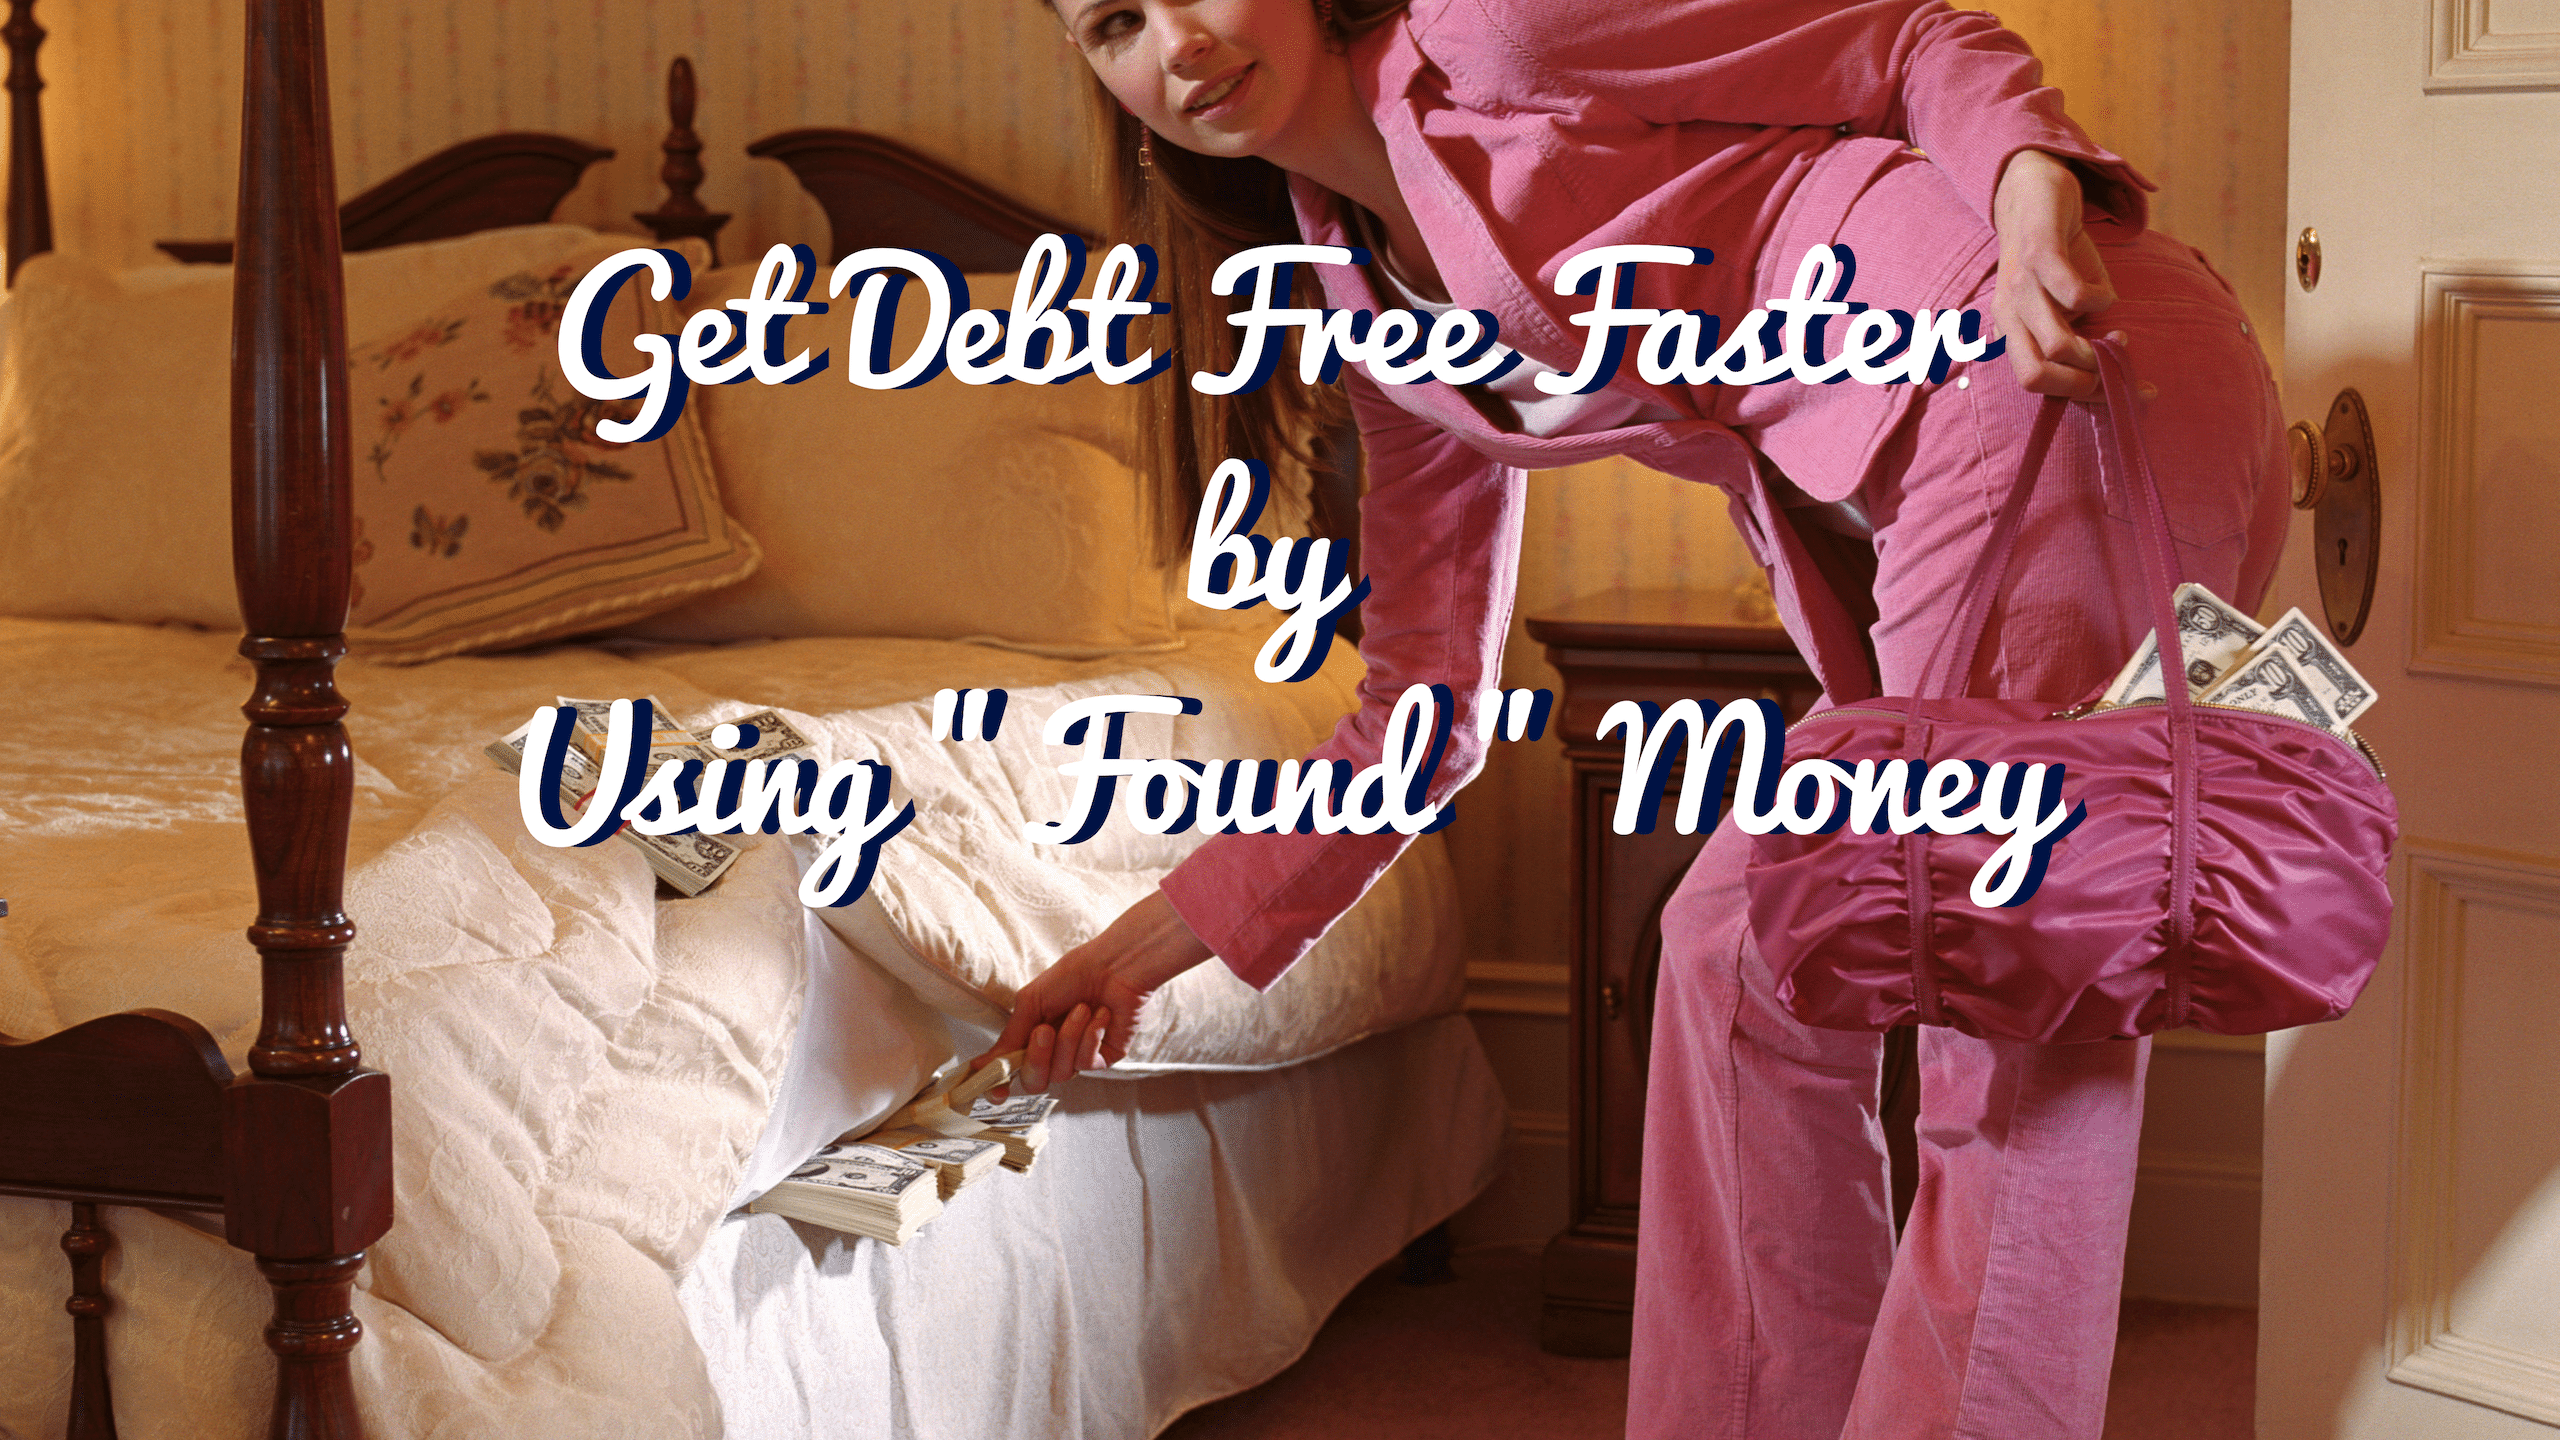 Get Debt Free Faster by Using "Found" Money